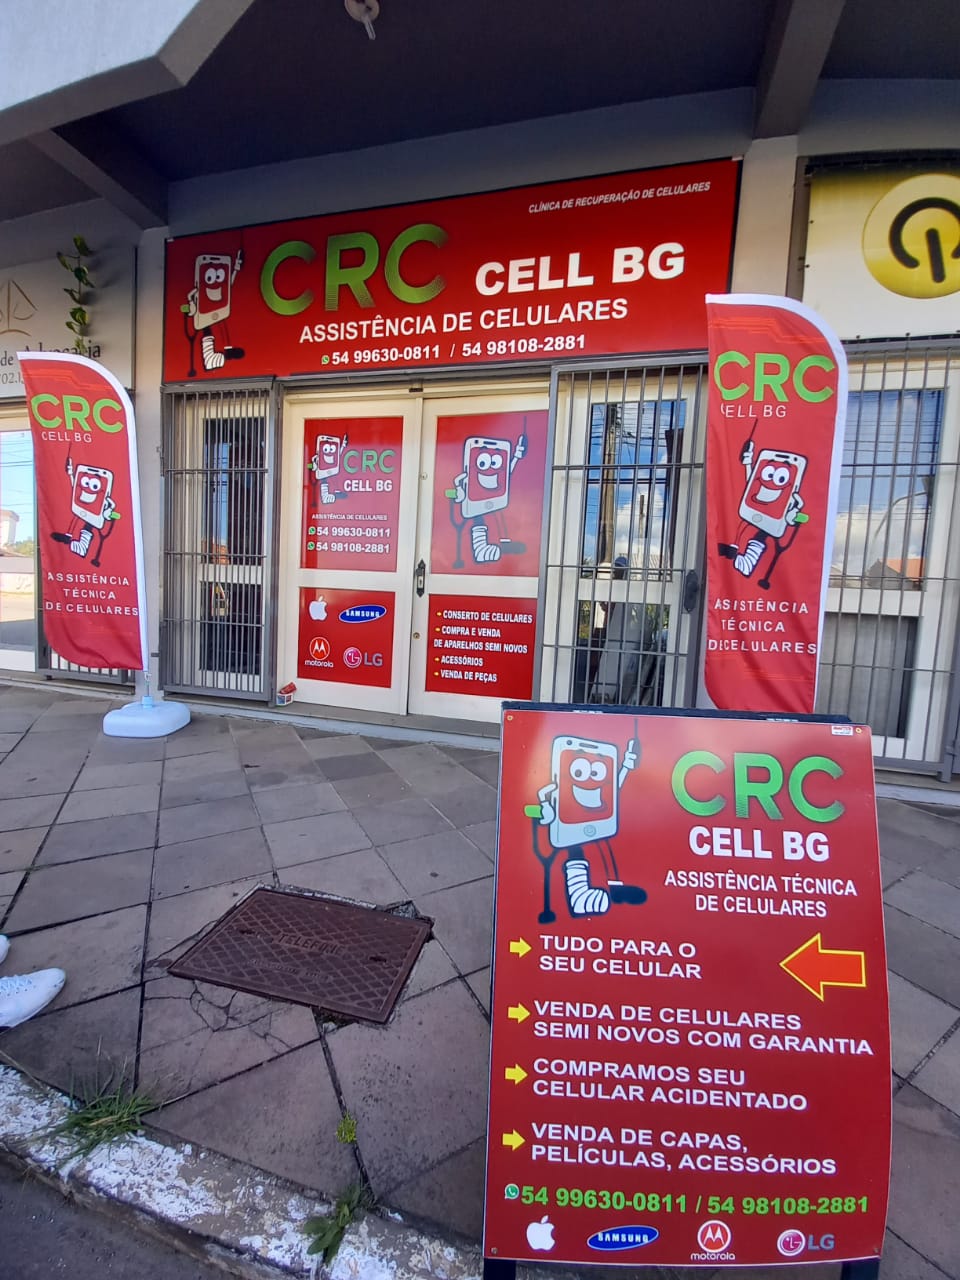 CRC Cell BG